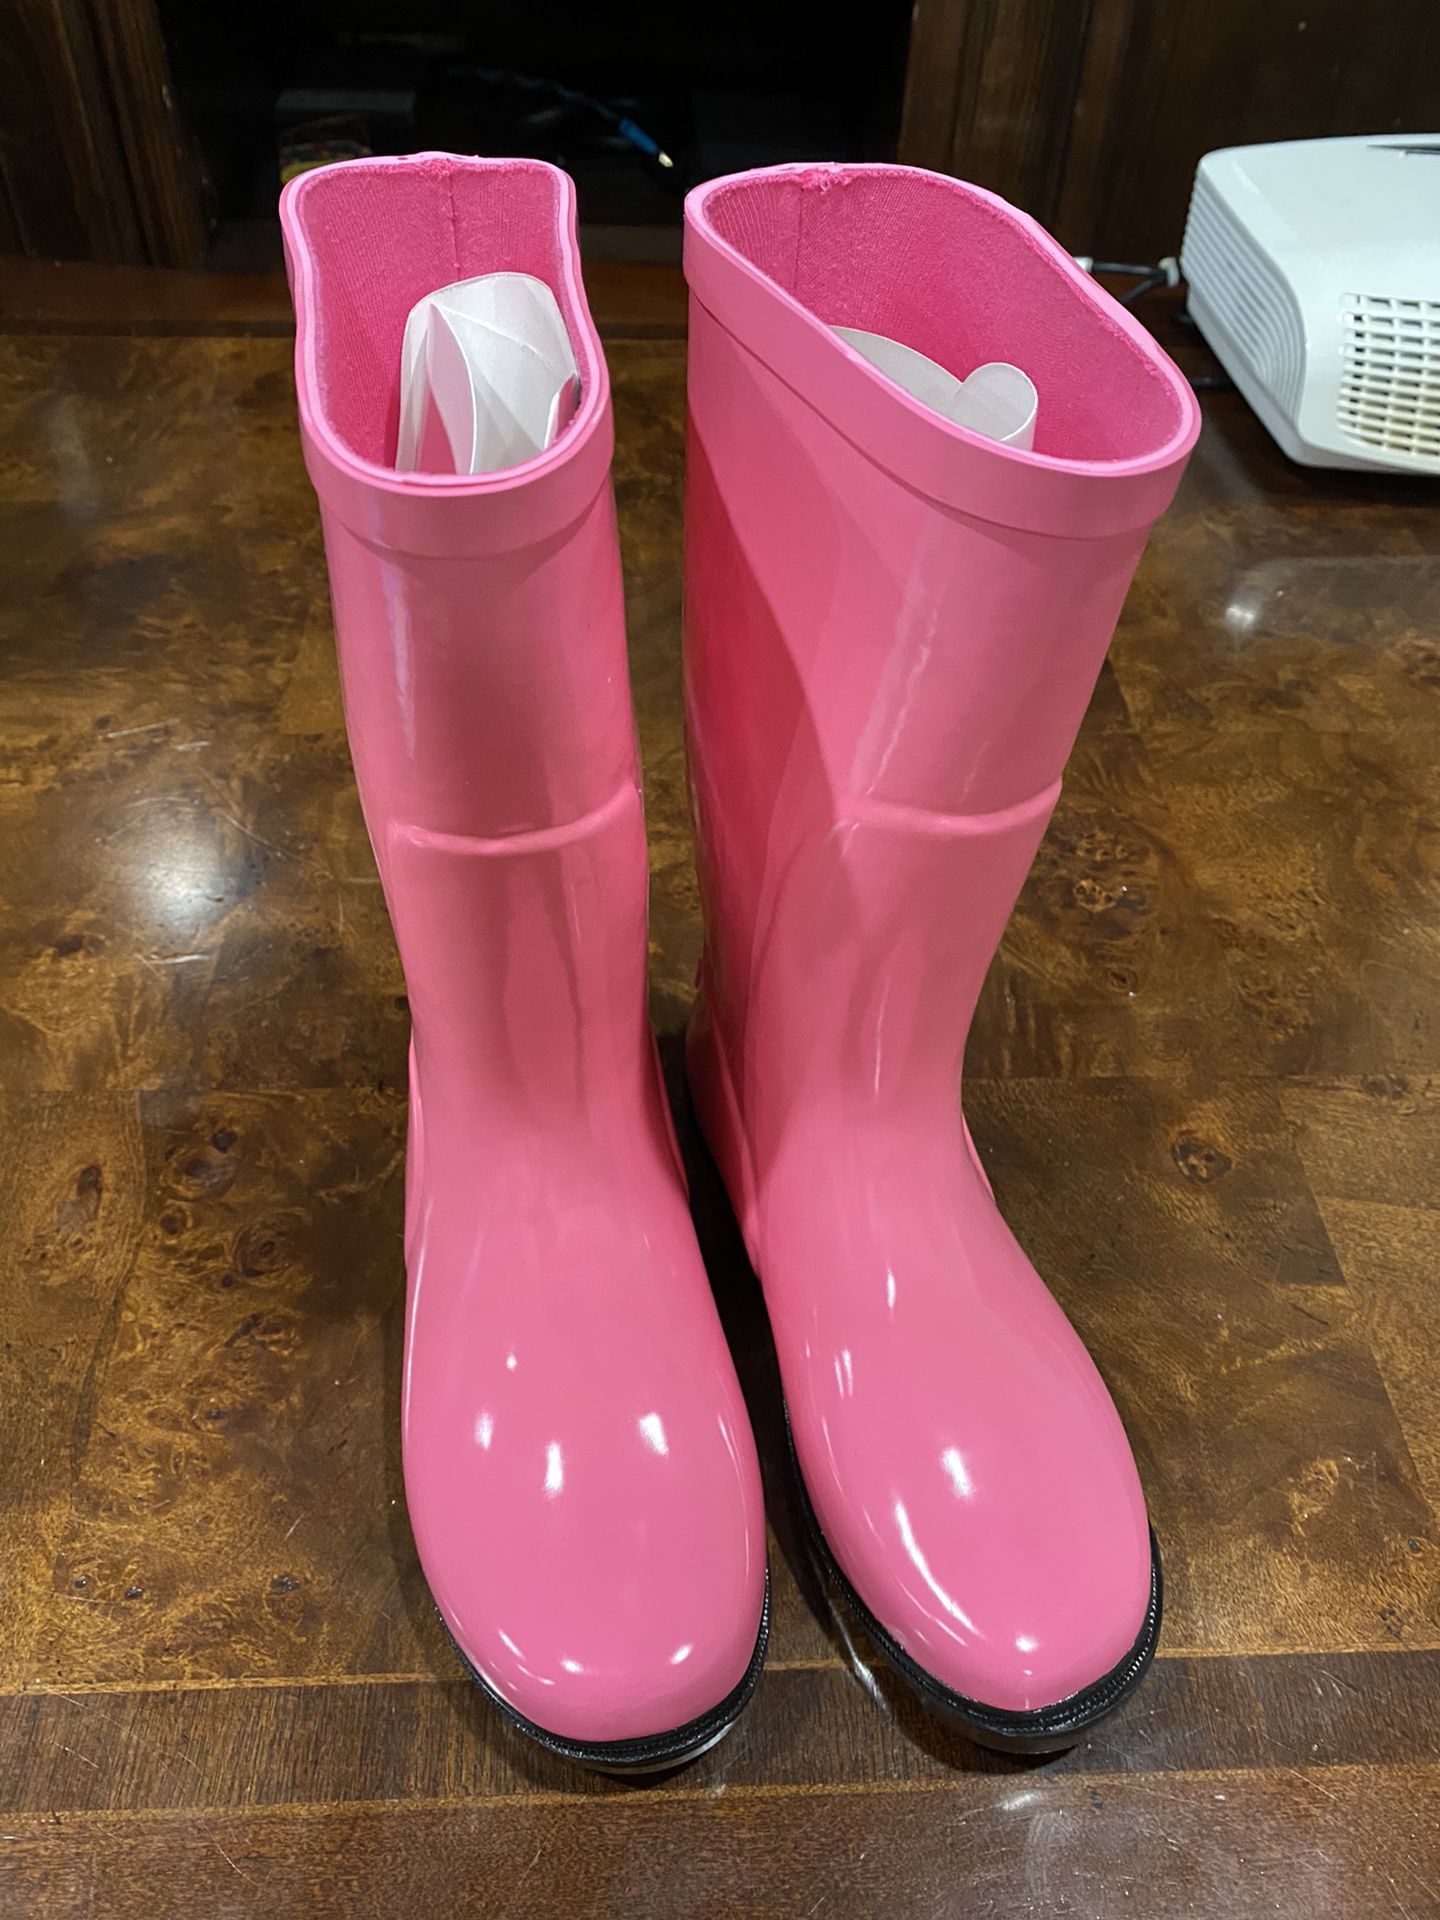 Columbia rain boots size 2